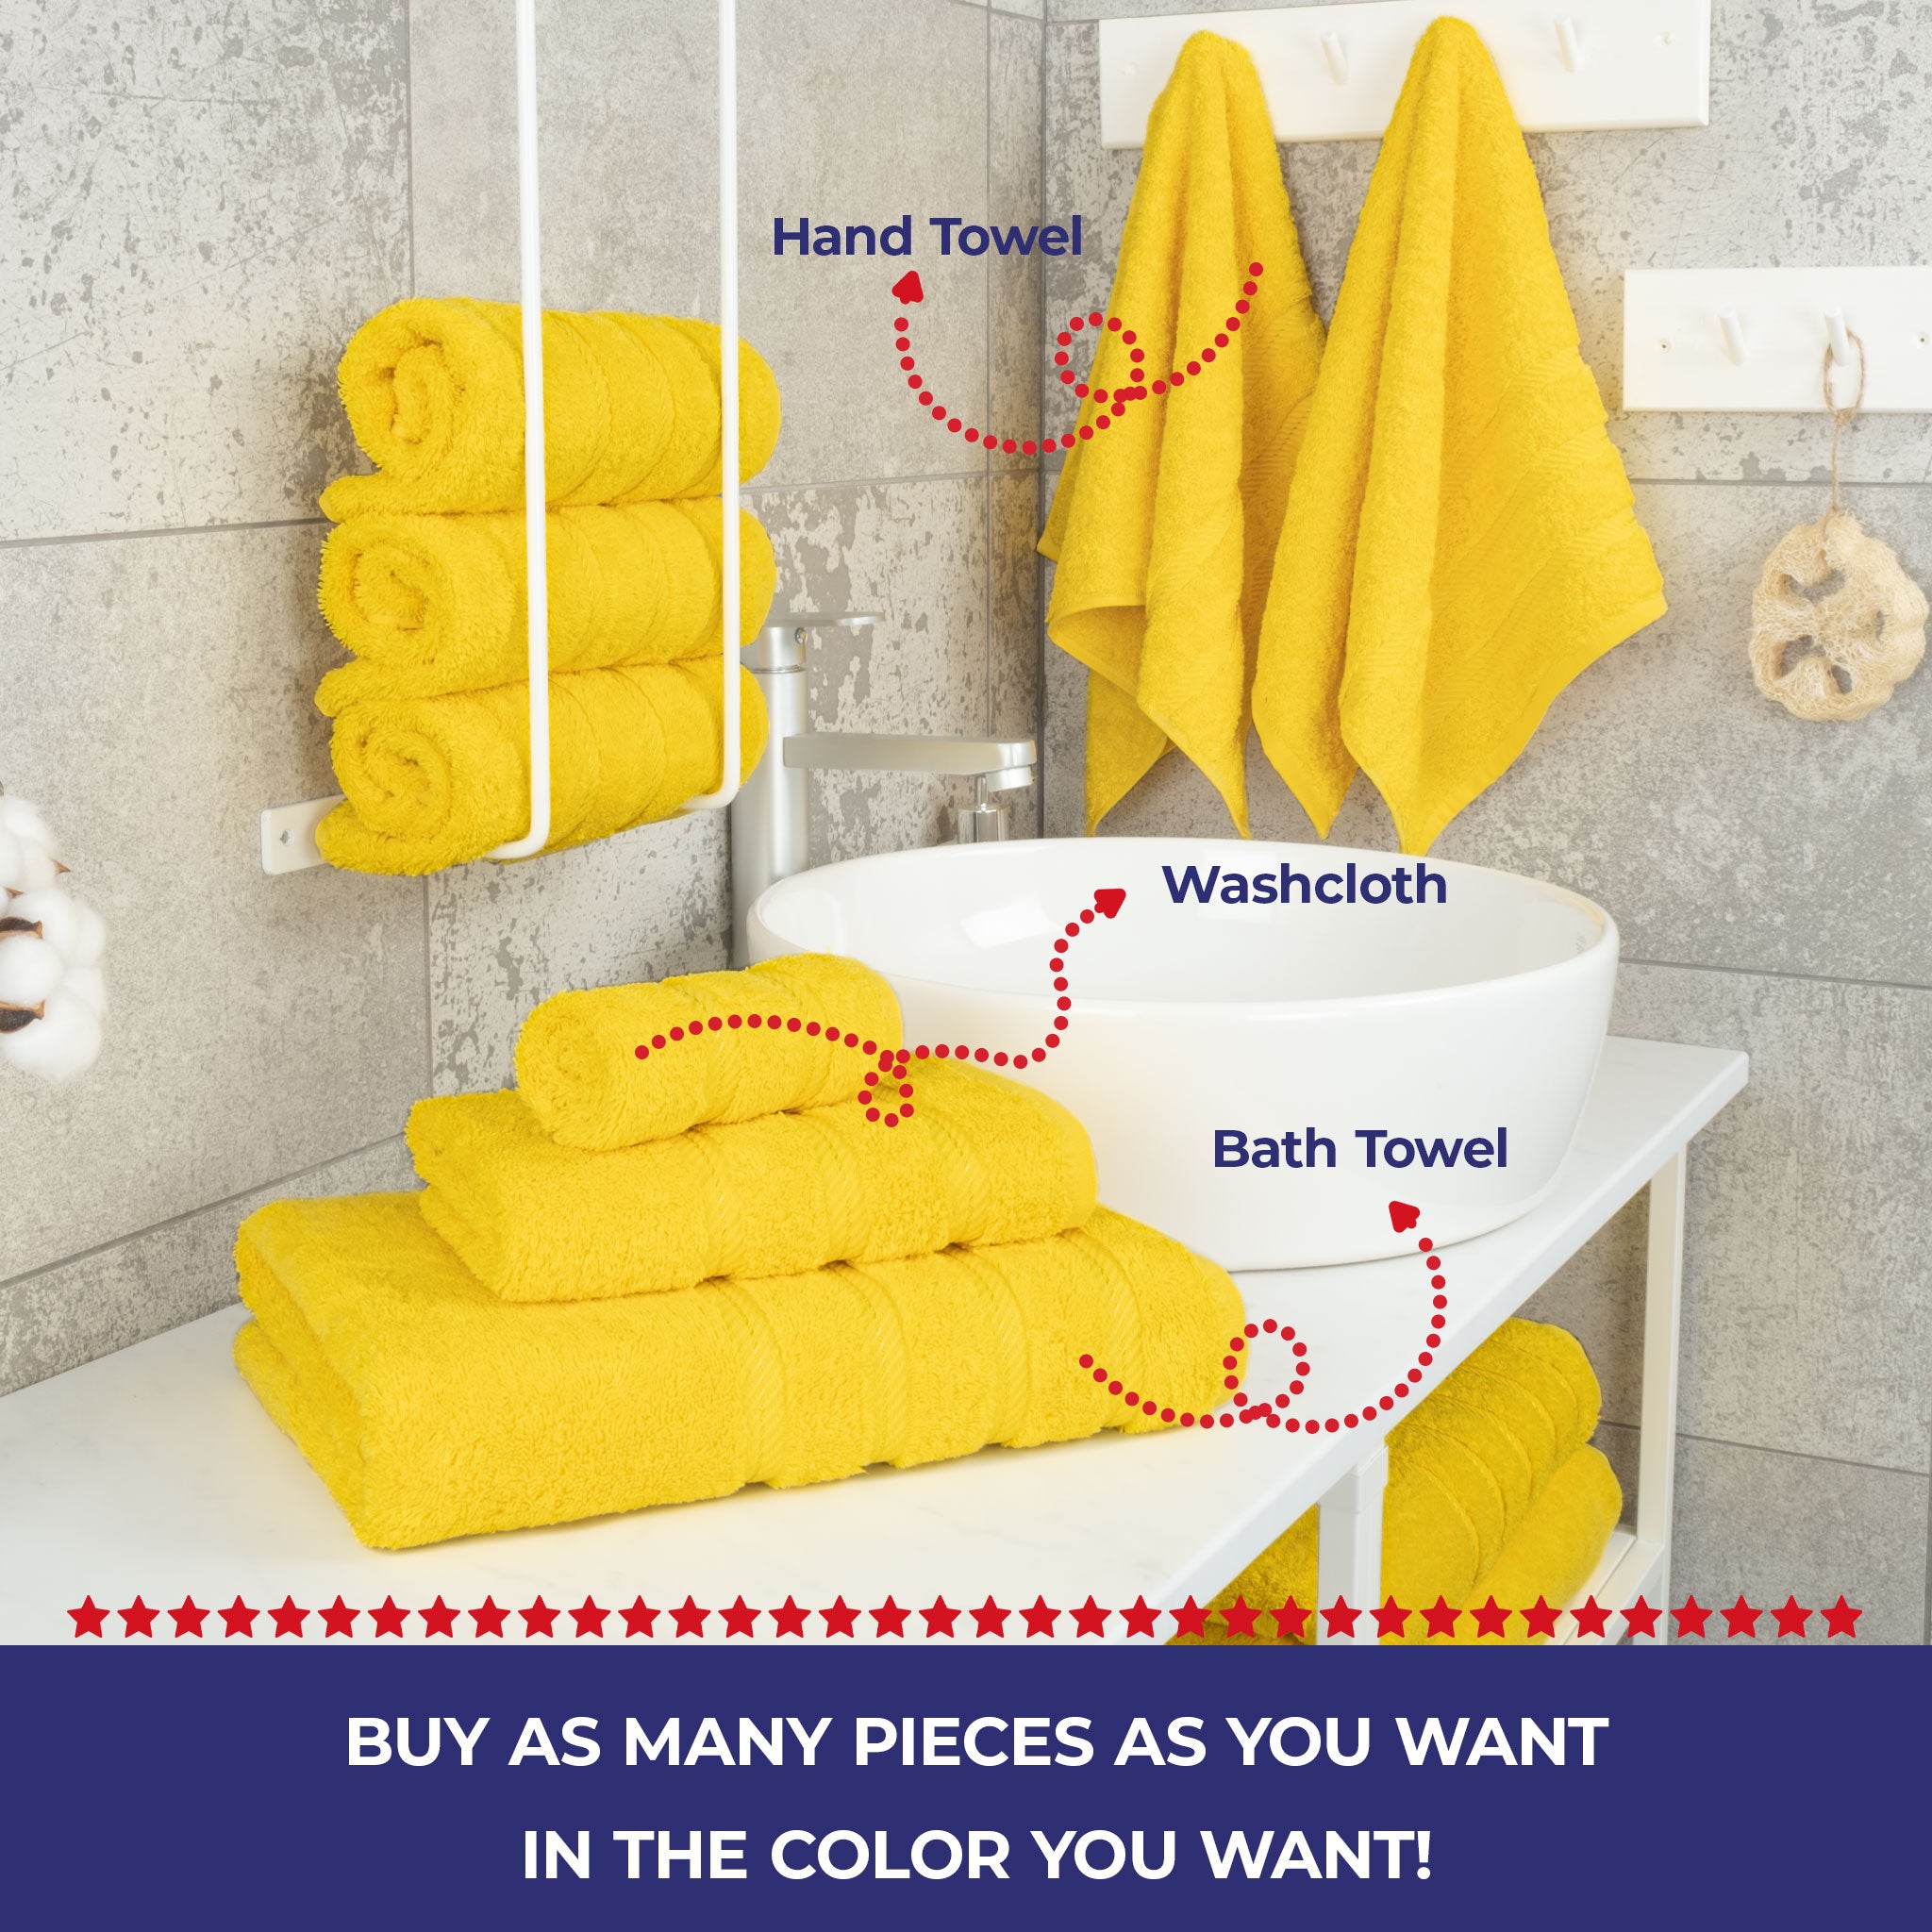 American Soft Linen - Single Piece Turkish Cotton Hand Towels - Yellow - 4